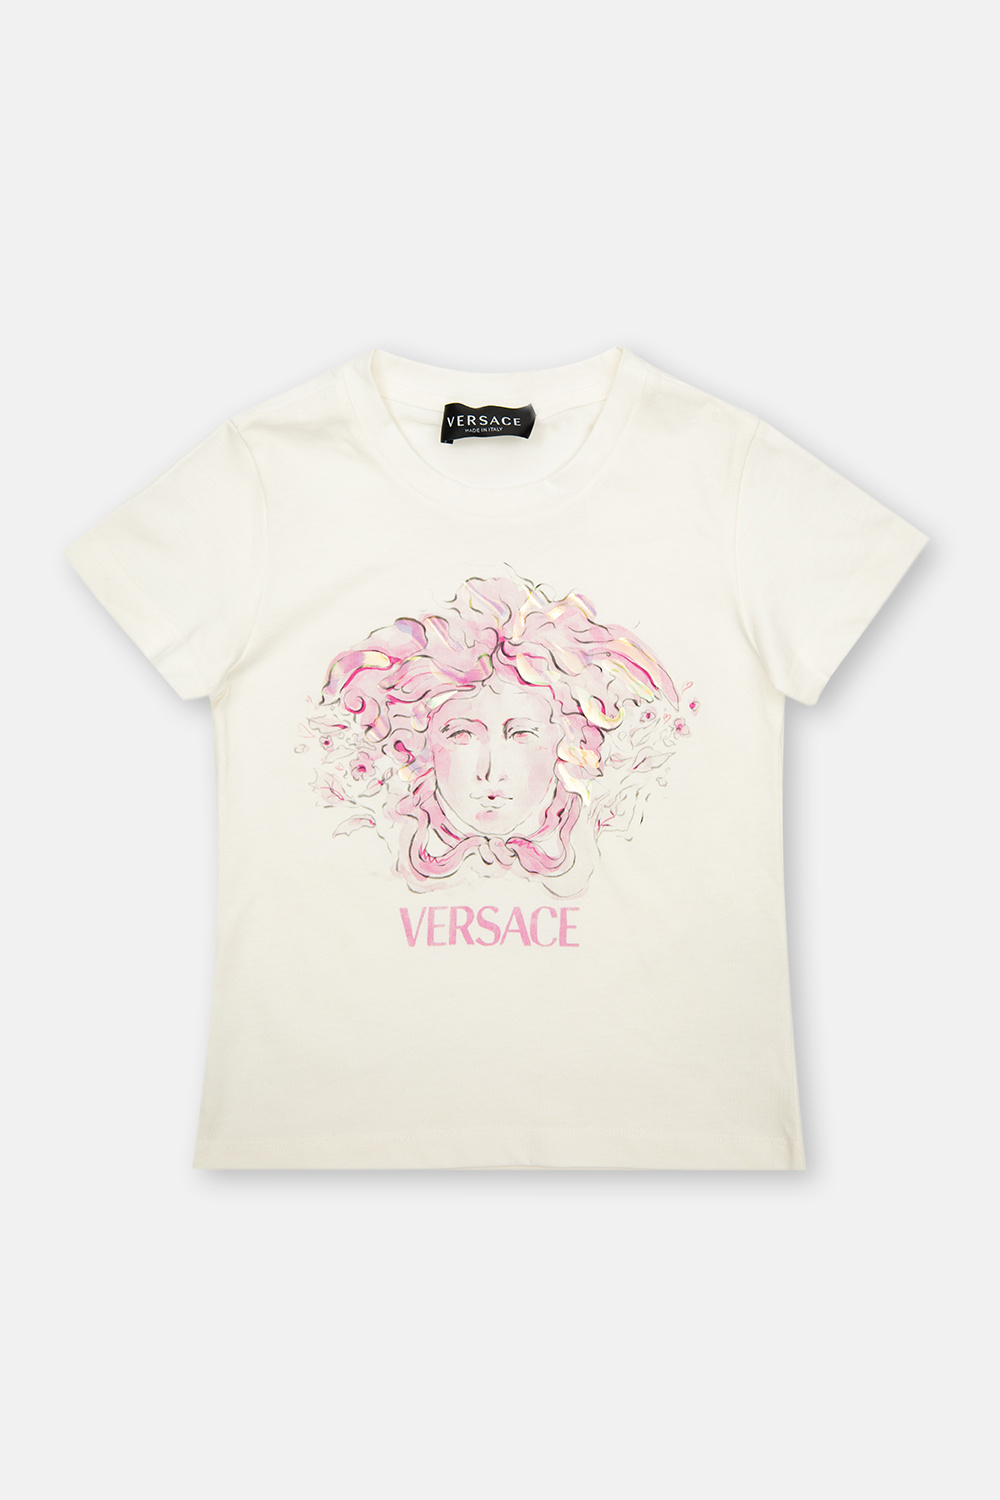 Emilio Pucci T-shirt smanicata Rosa - Versace Kids T - 14 years), Kids's  Girls clothes (4